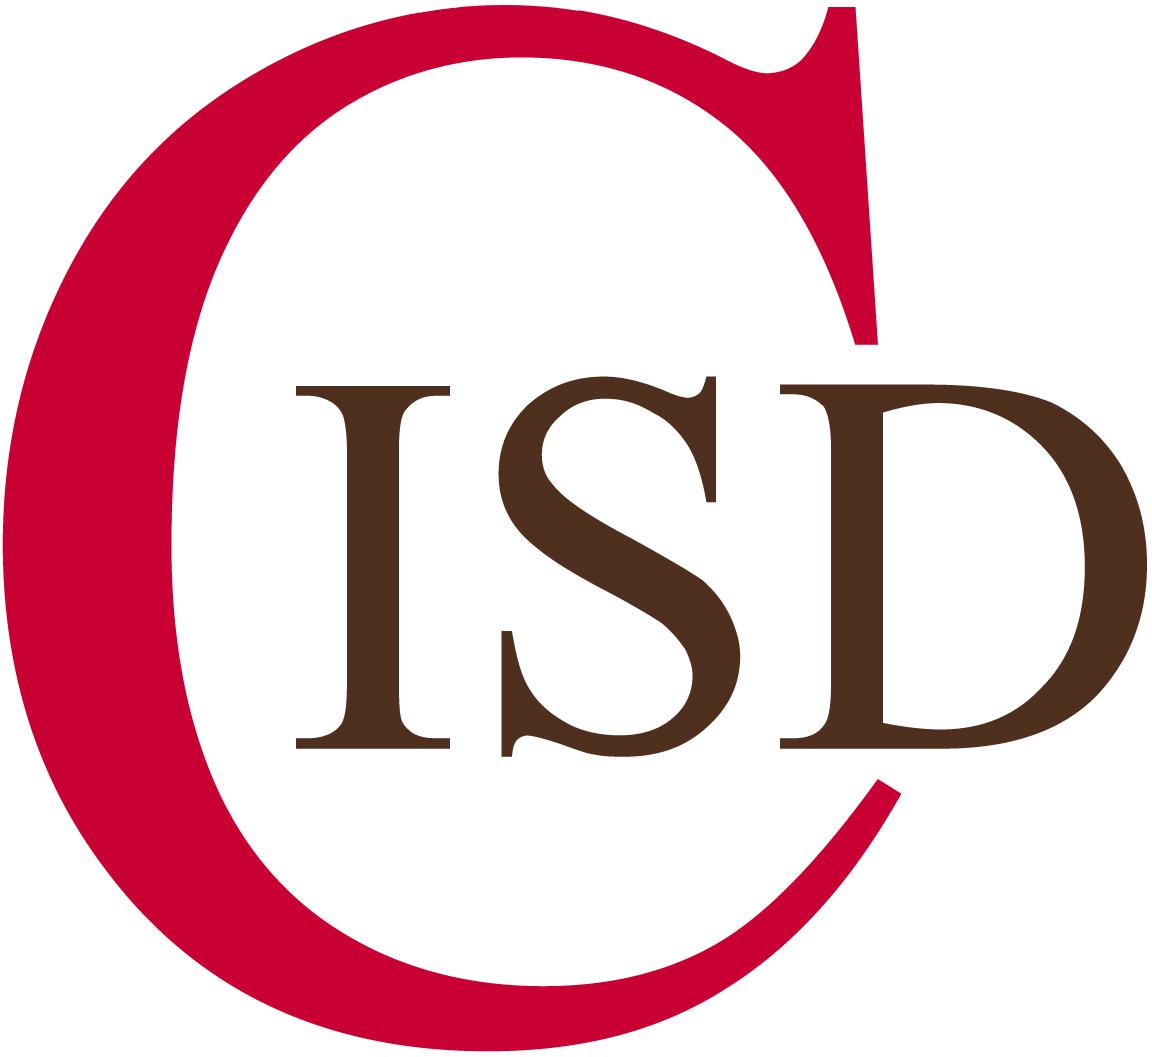 Coppell ISD logo